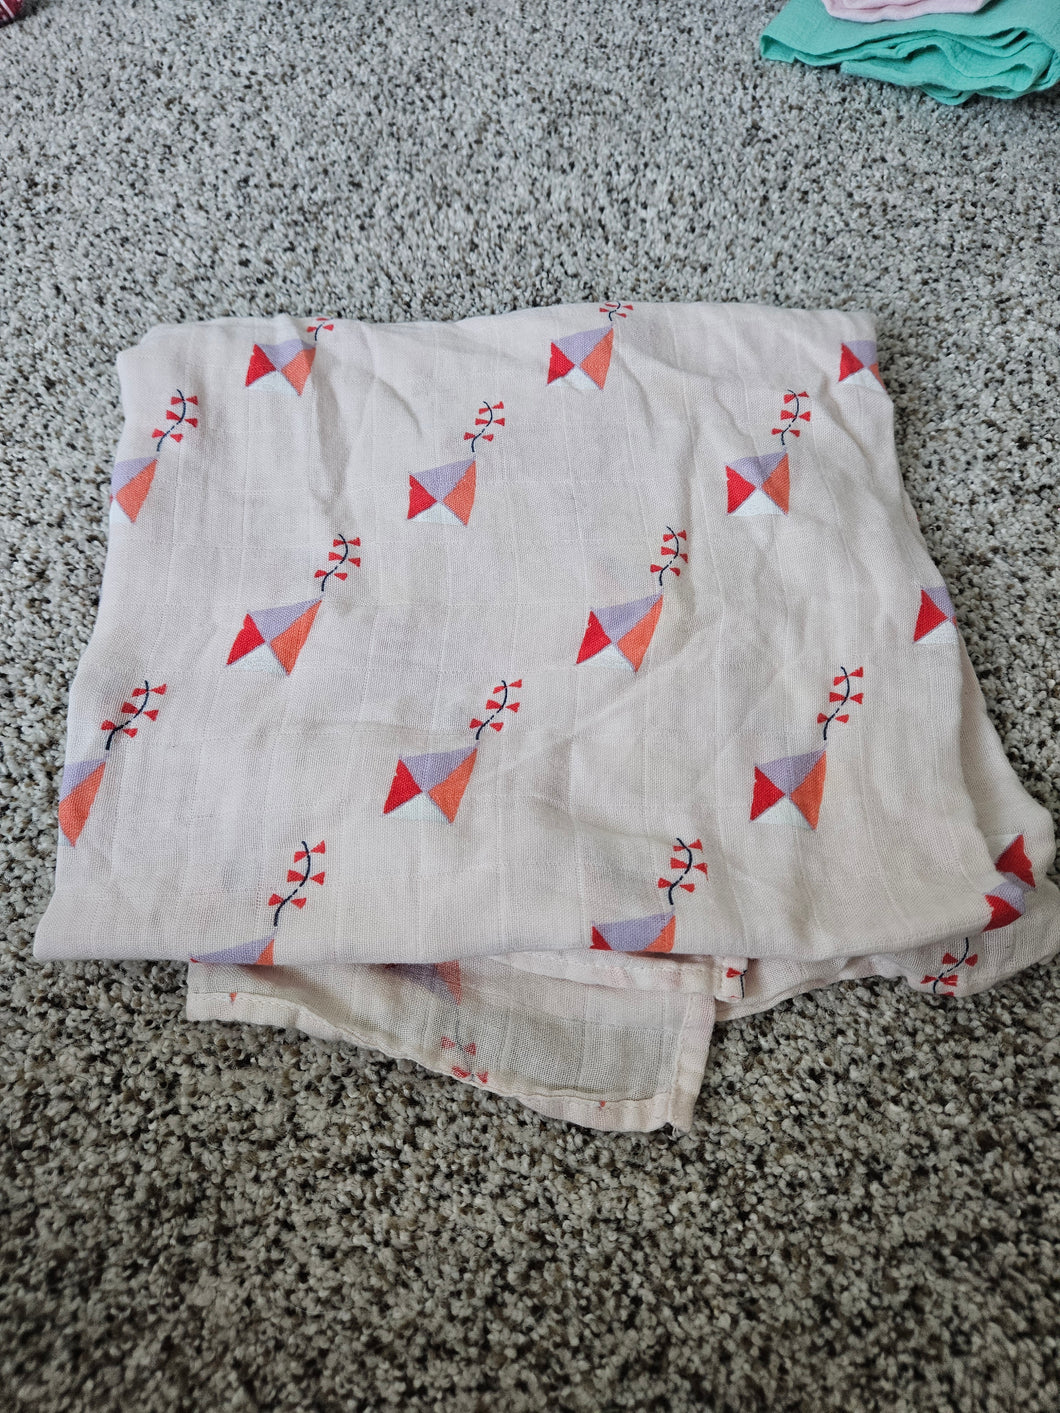 Linen kite blanket - large swaddle size